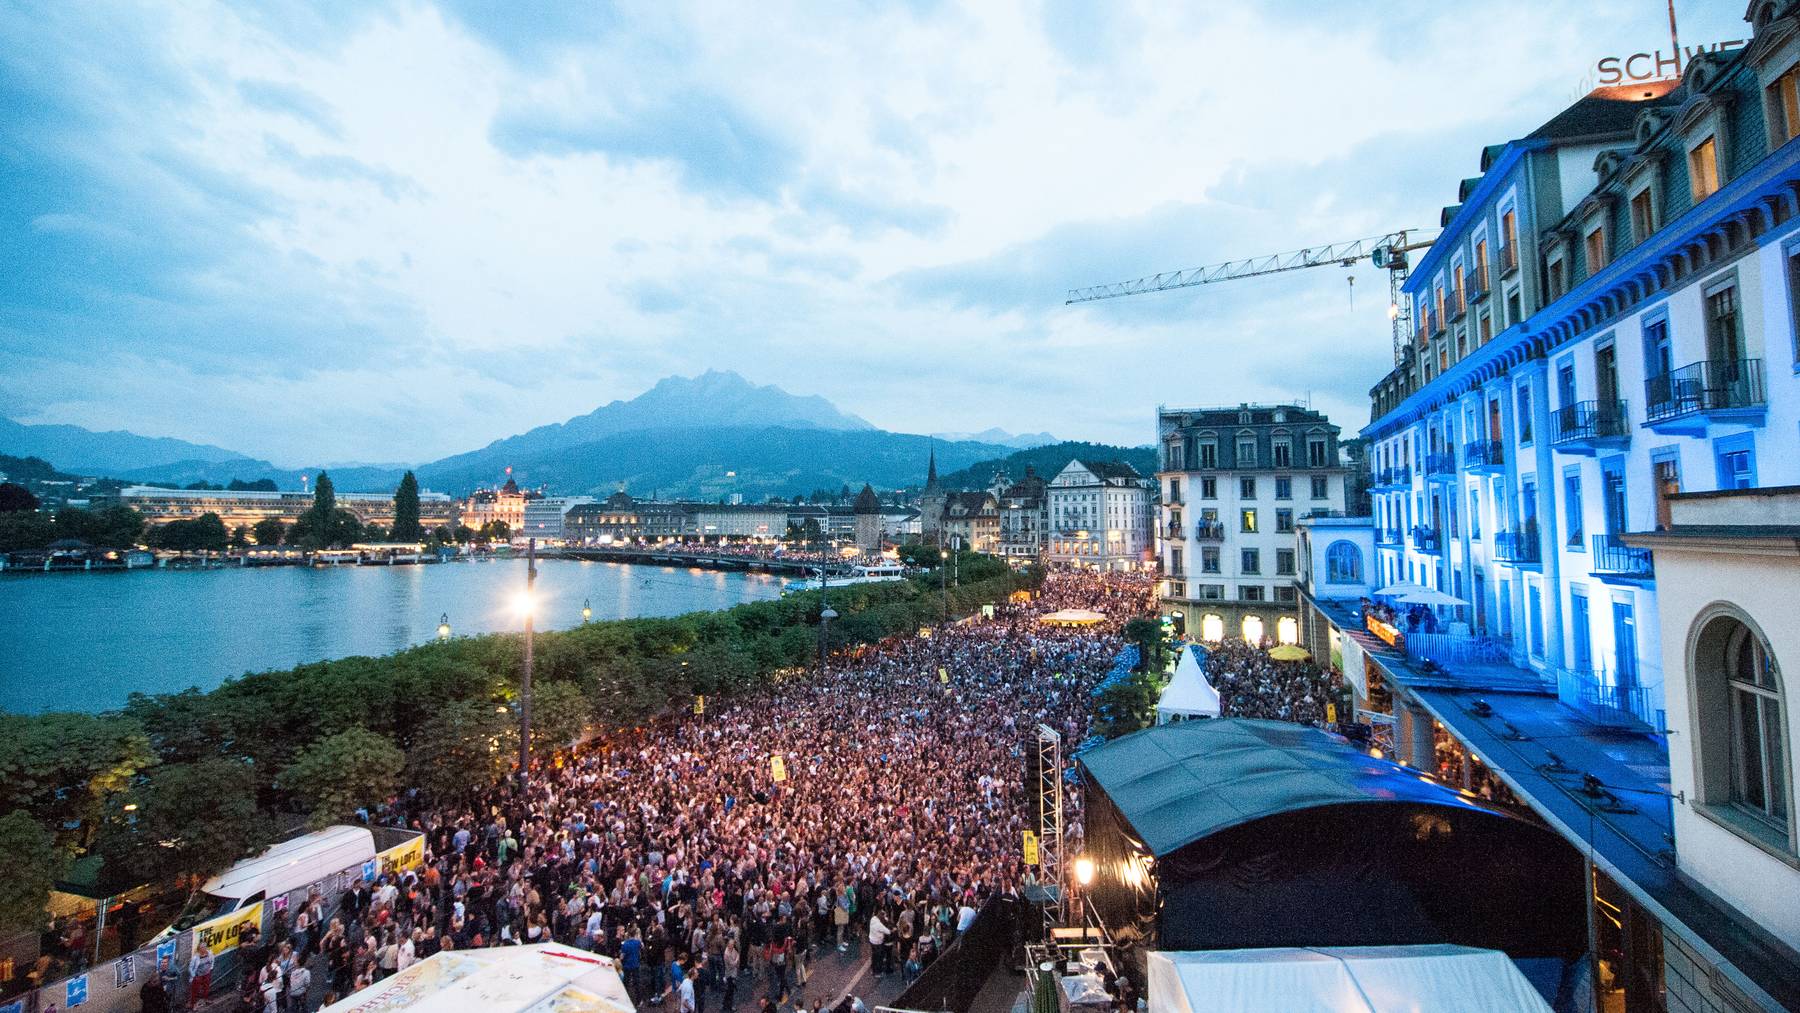 Luzerner Fest 2014